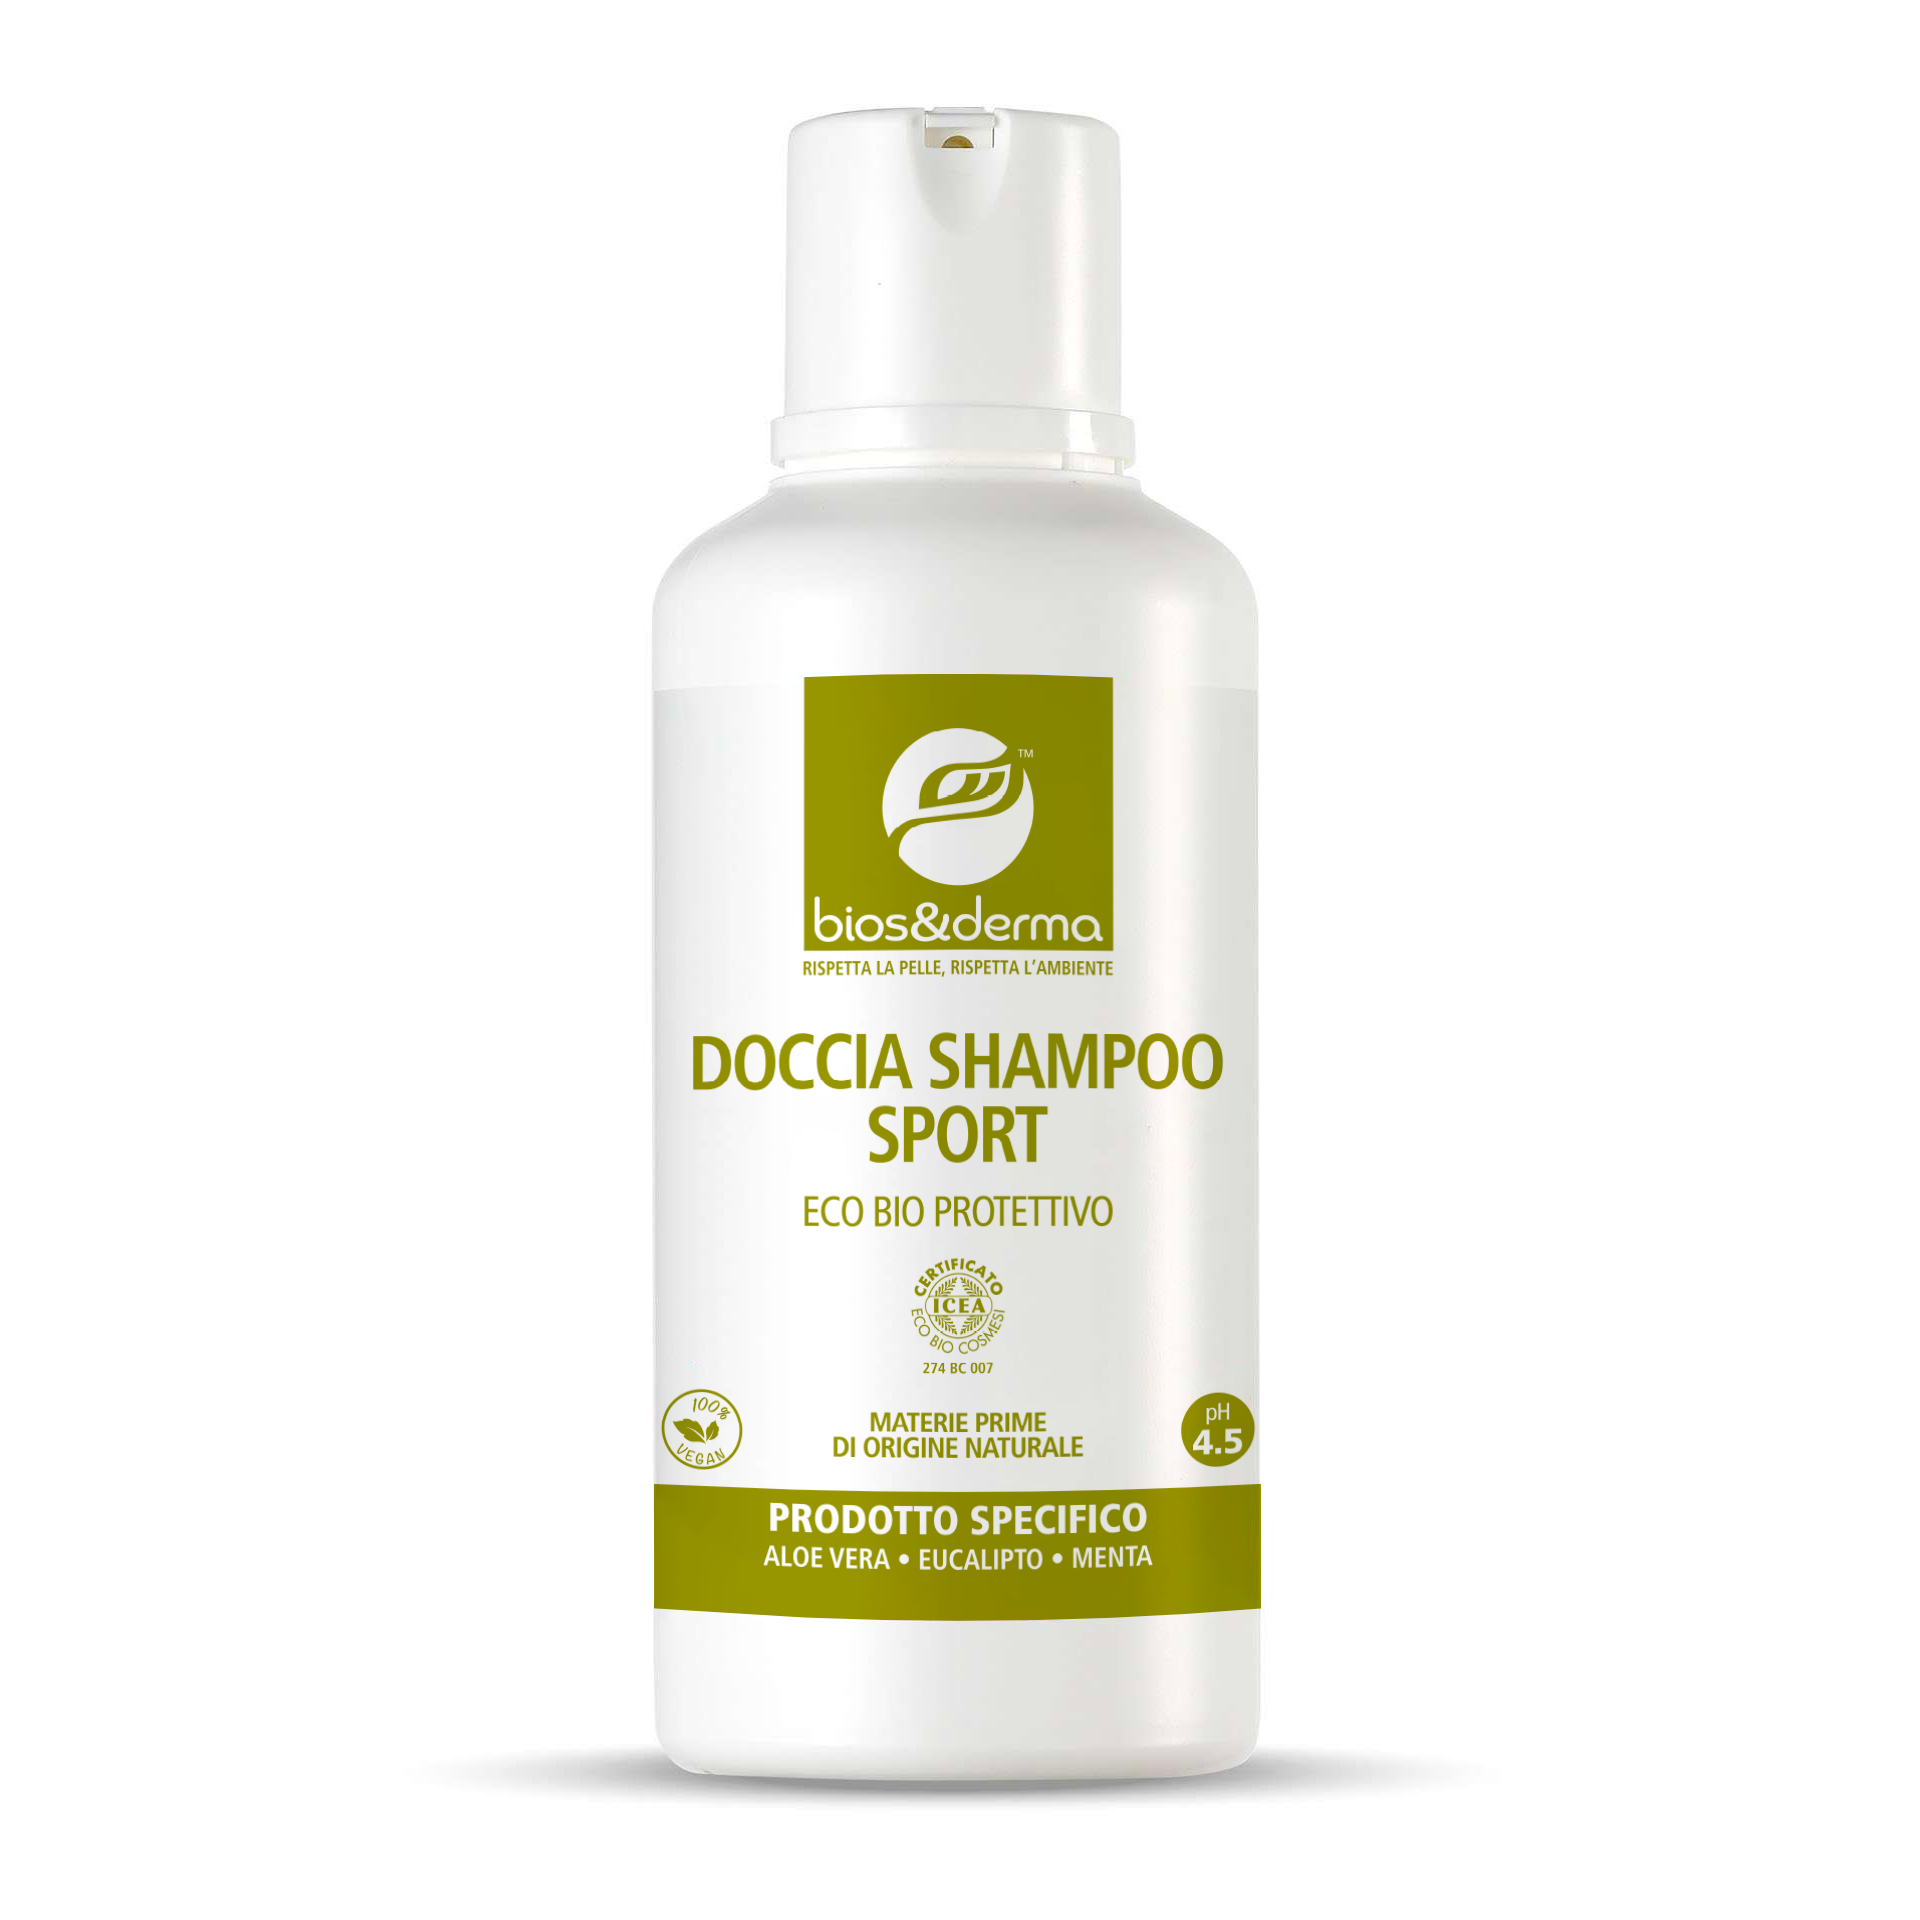 DOCCIA SHAMPOO SPORT BIOLOGICO (500ml) - Bios&Derma